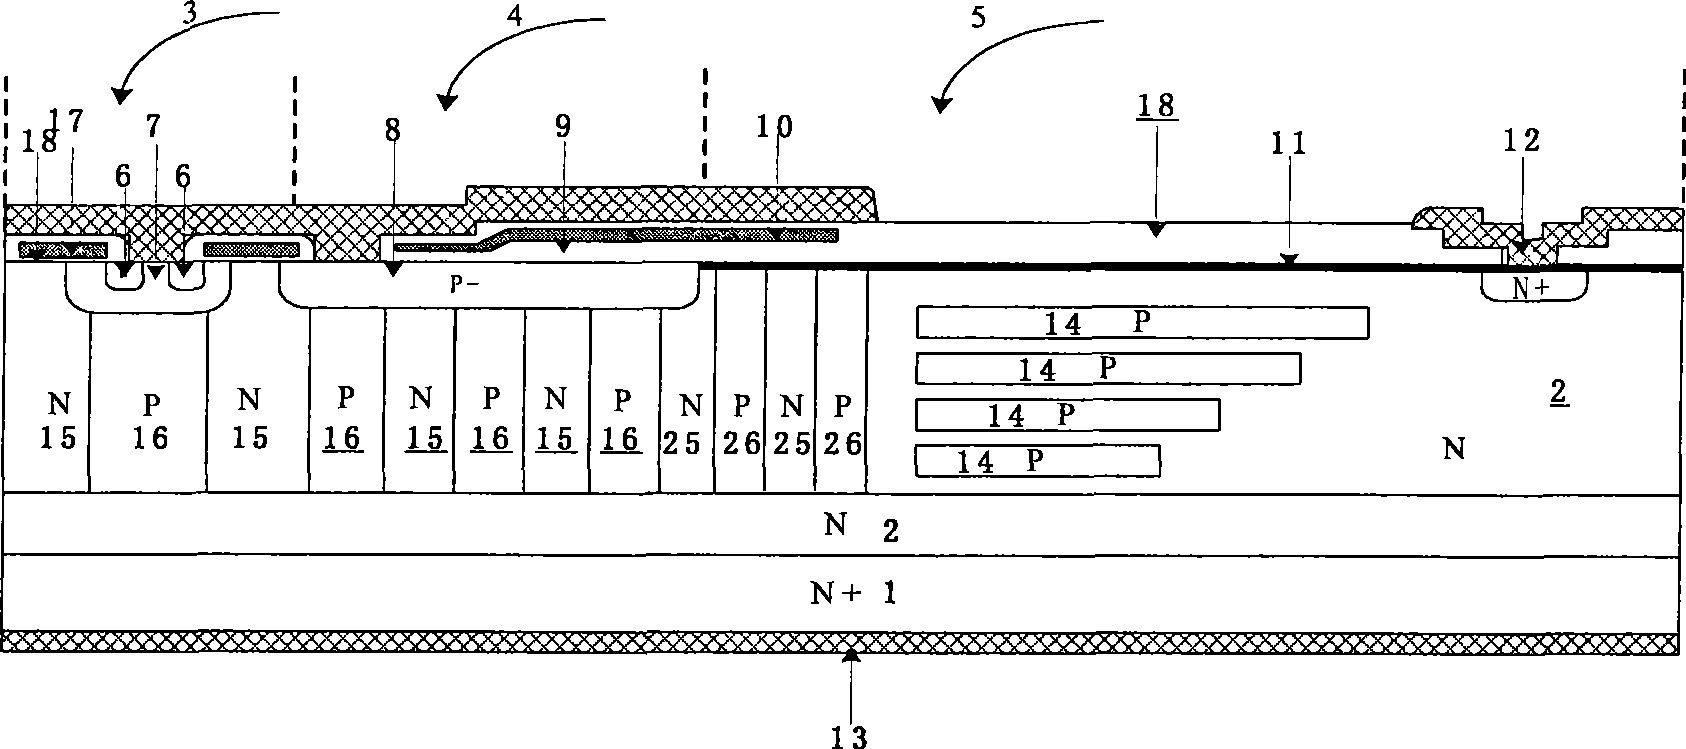 Ultra-junction longitudinal bilateral diffusion metal oxide semiconductor tube